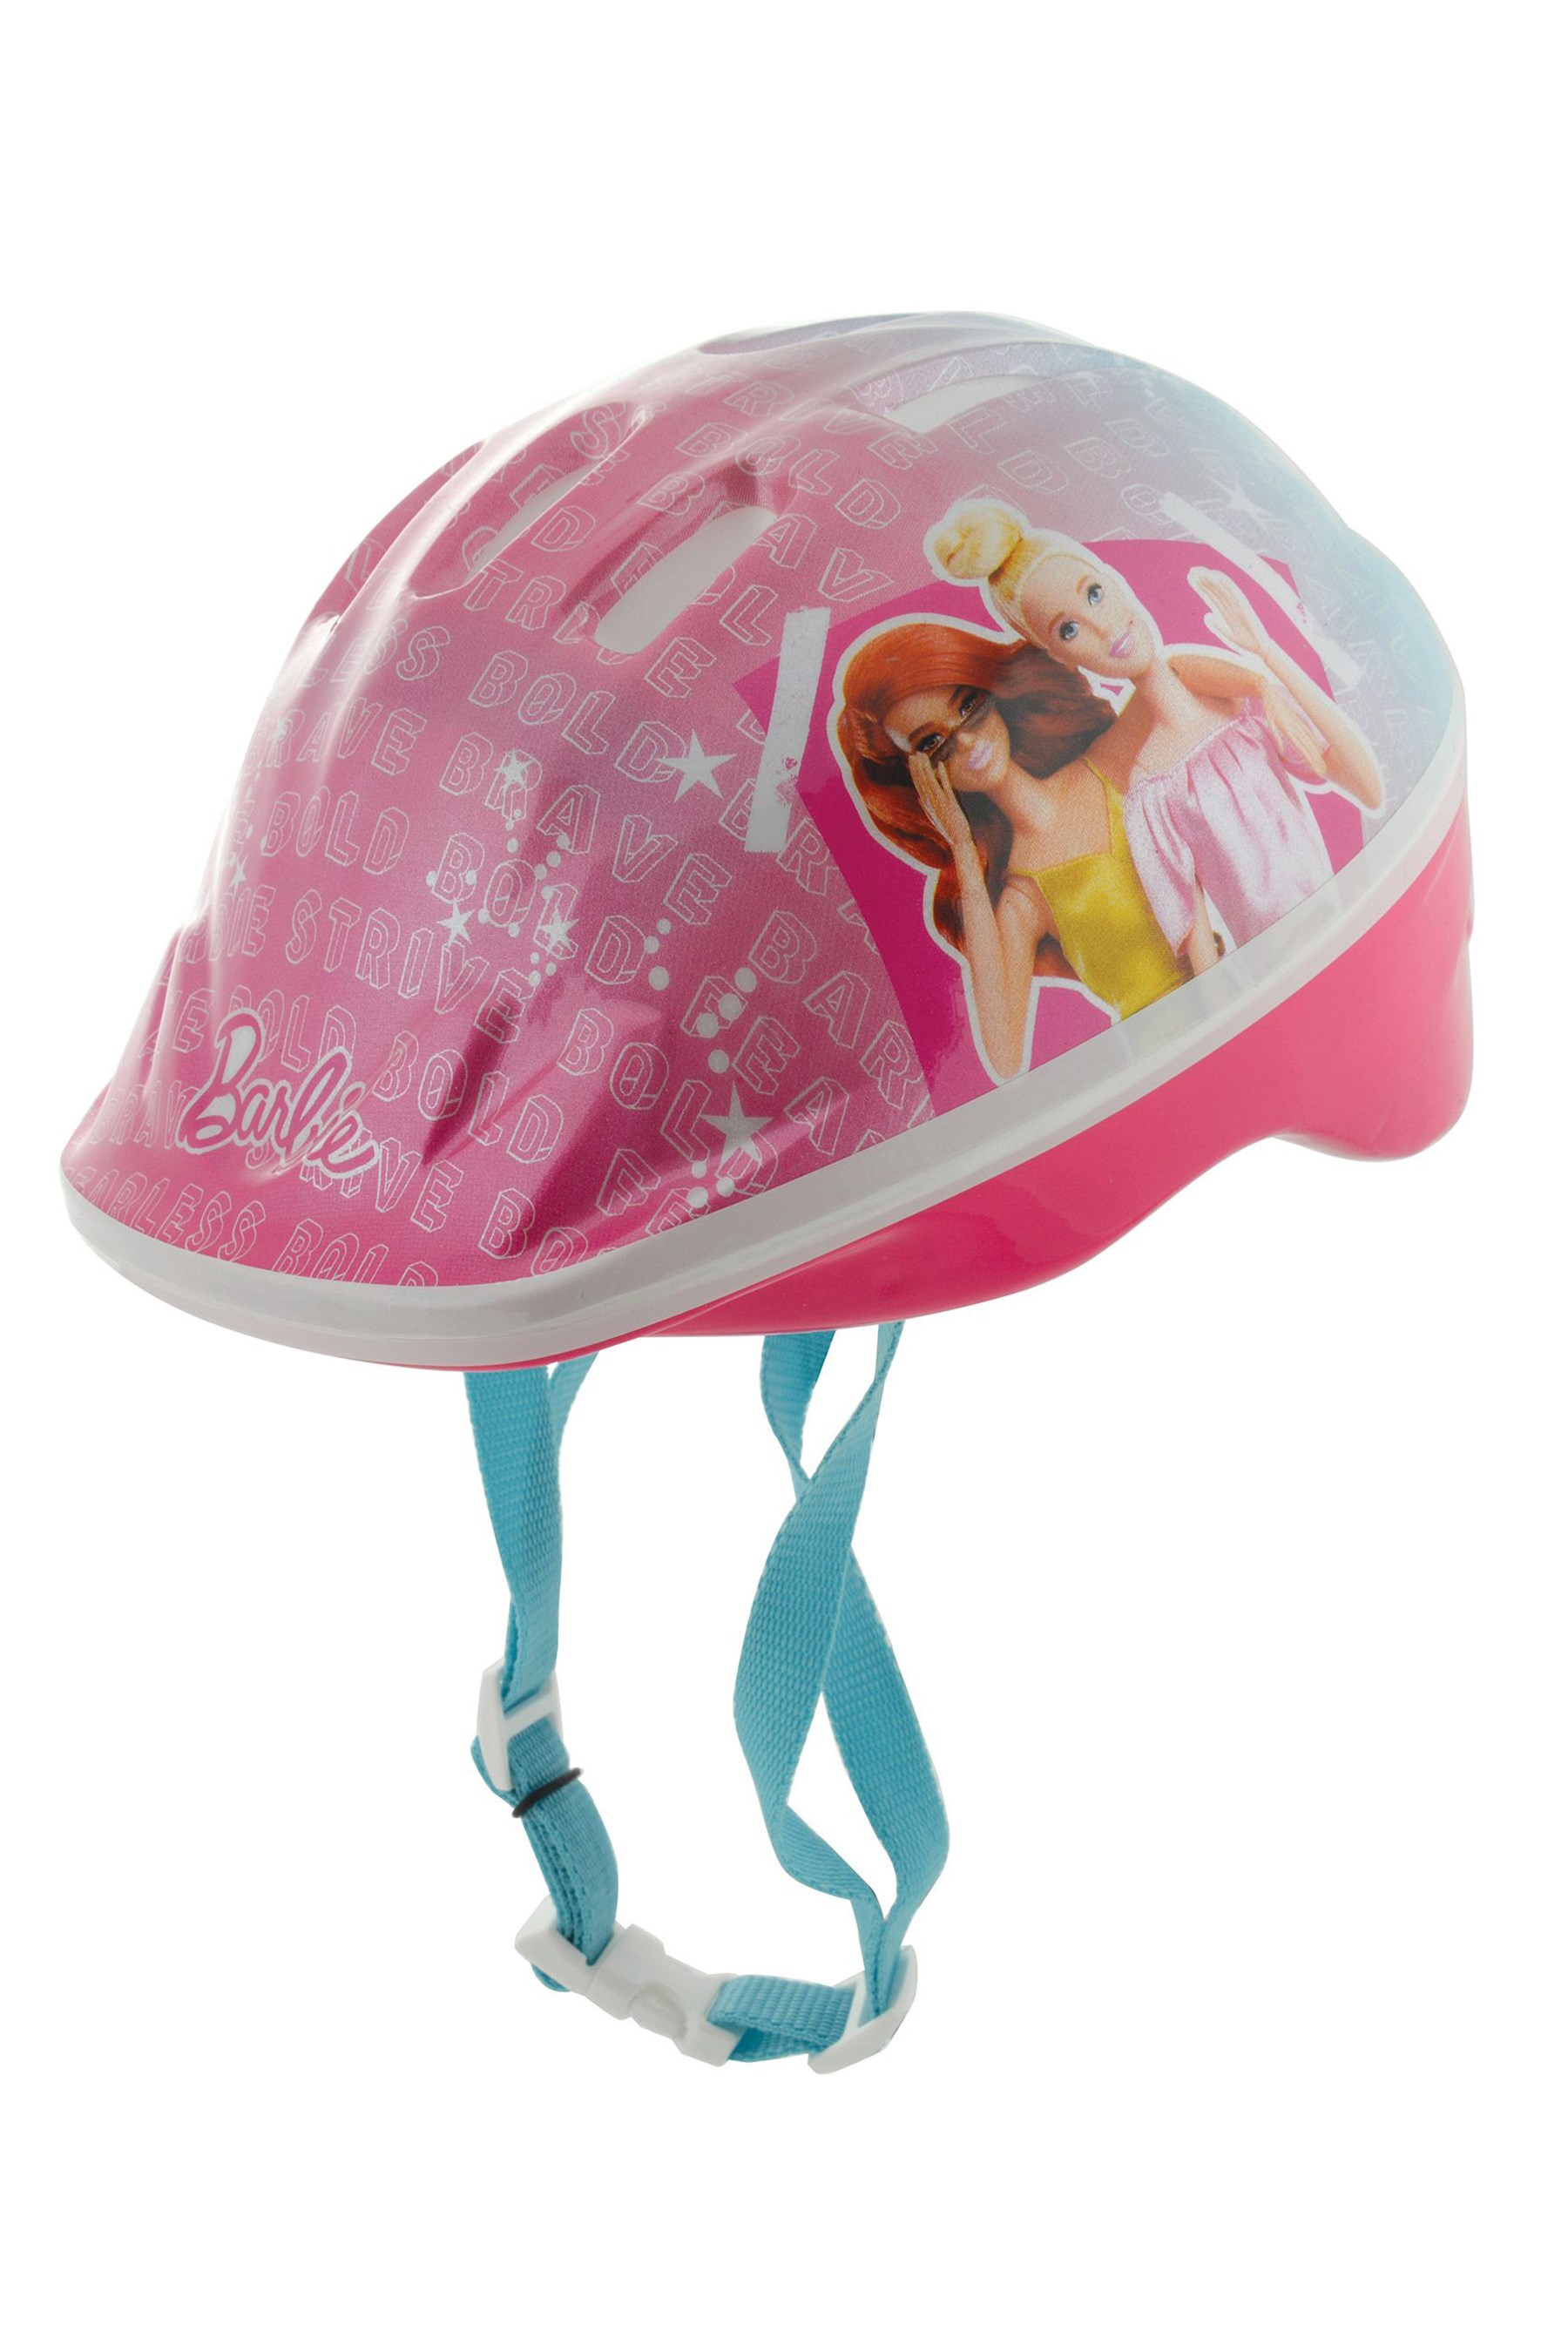 Barbie Kids Safety Cycling Helmet 48-52cm -